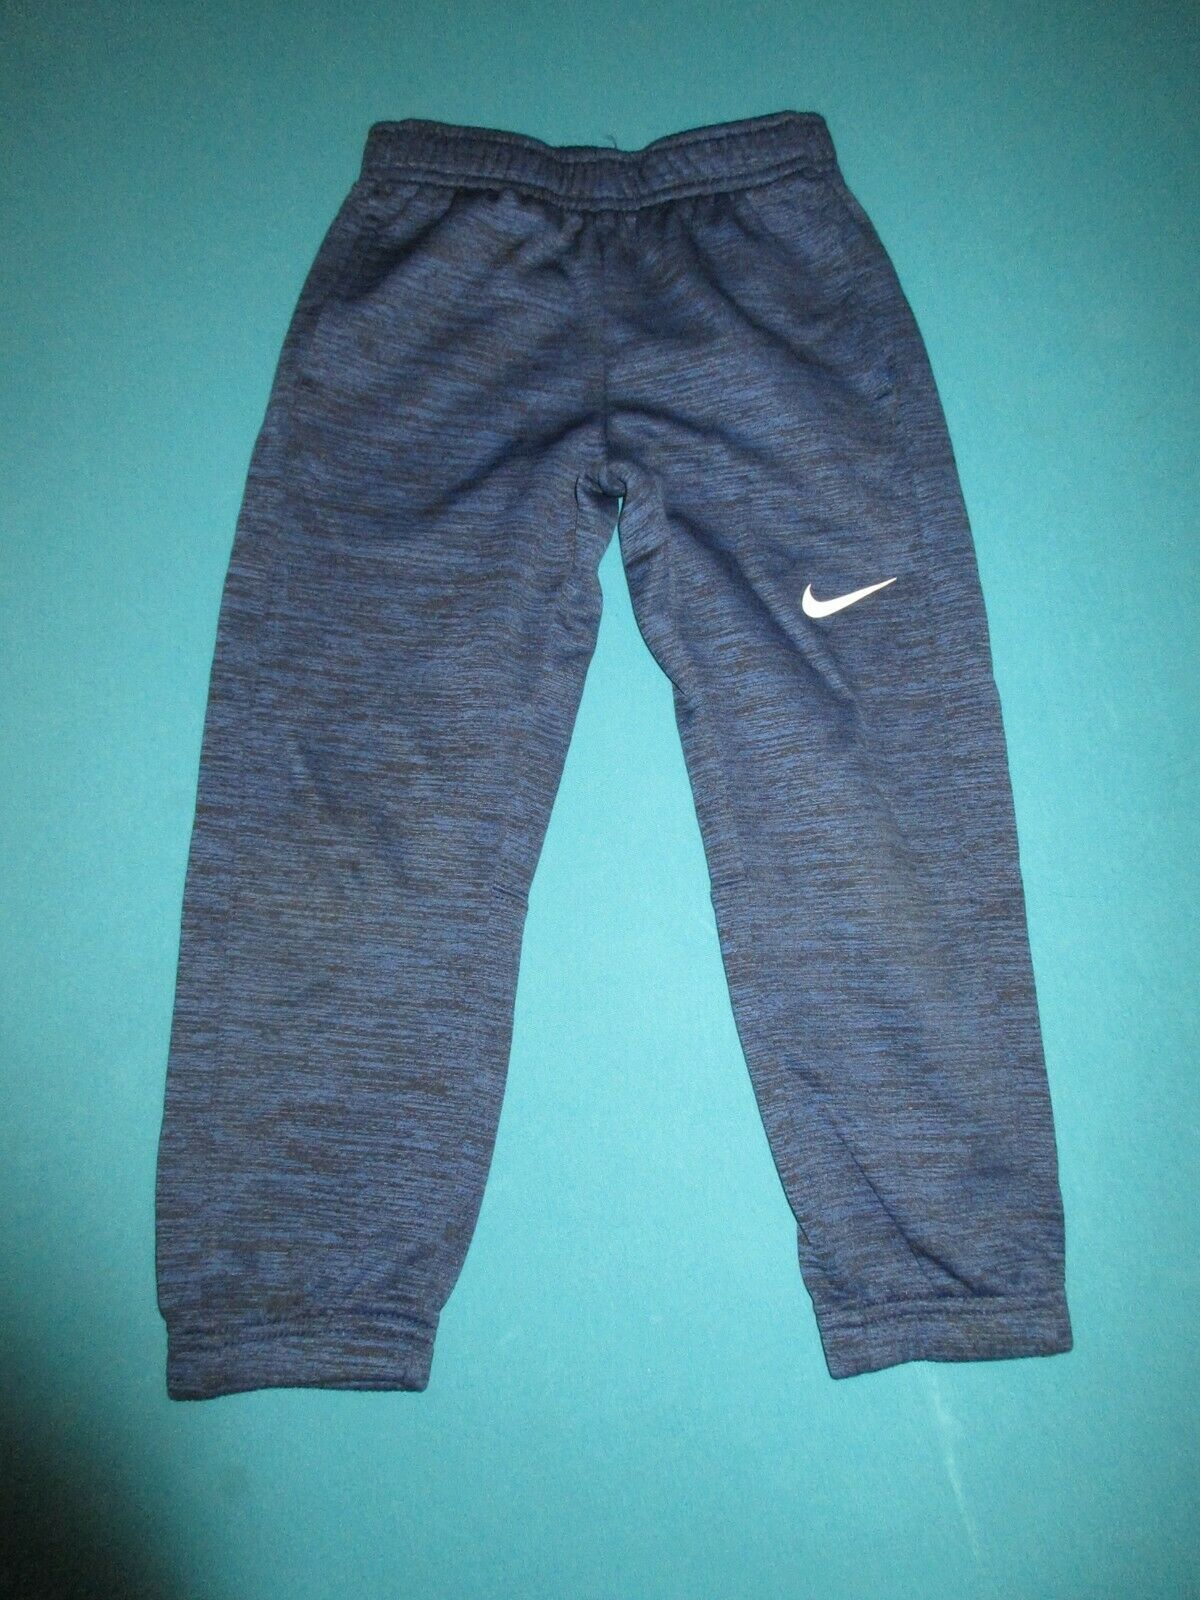 Nike Boys Blue Sweatpants Size Small S 5